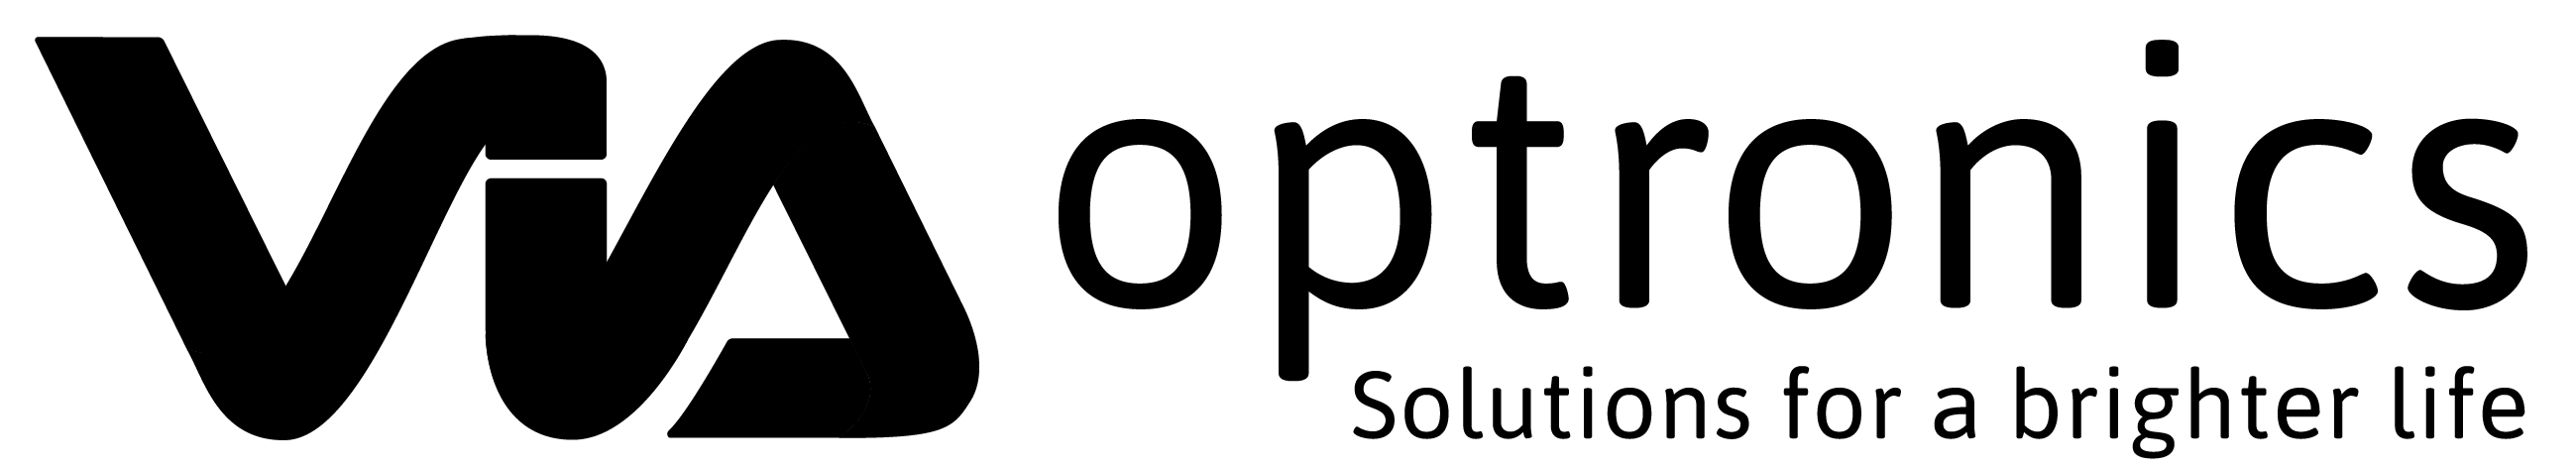 VIA optronics logo black